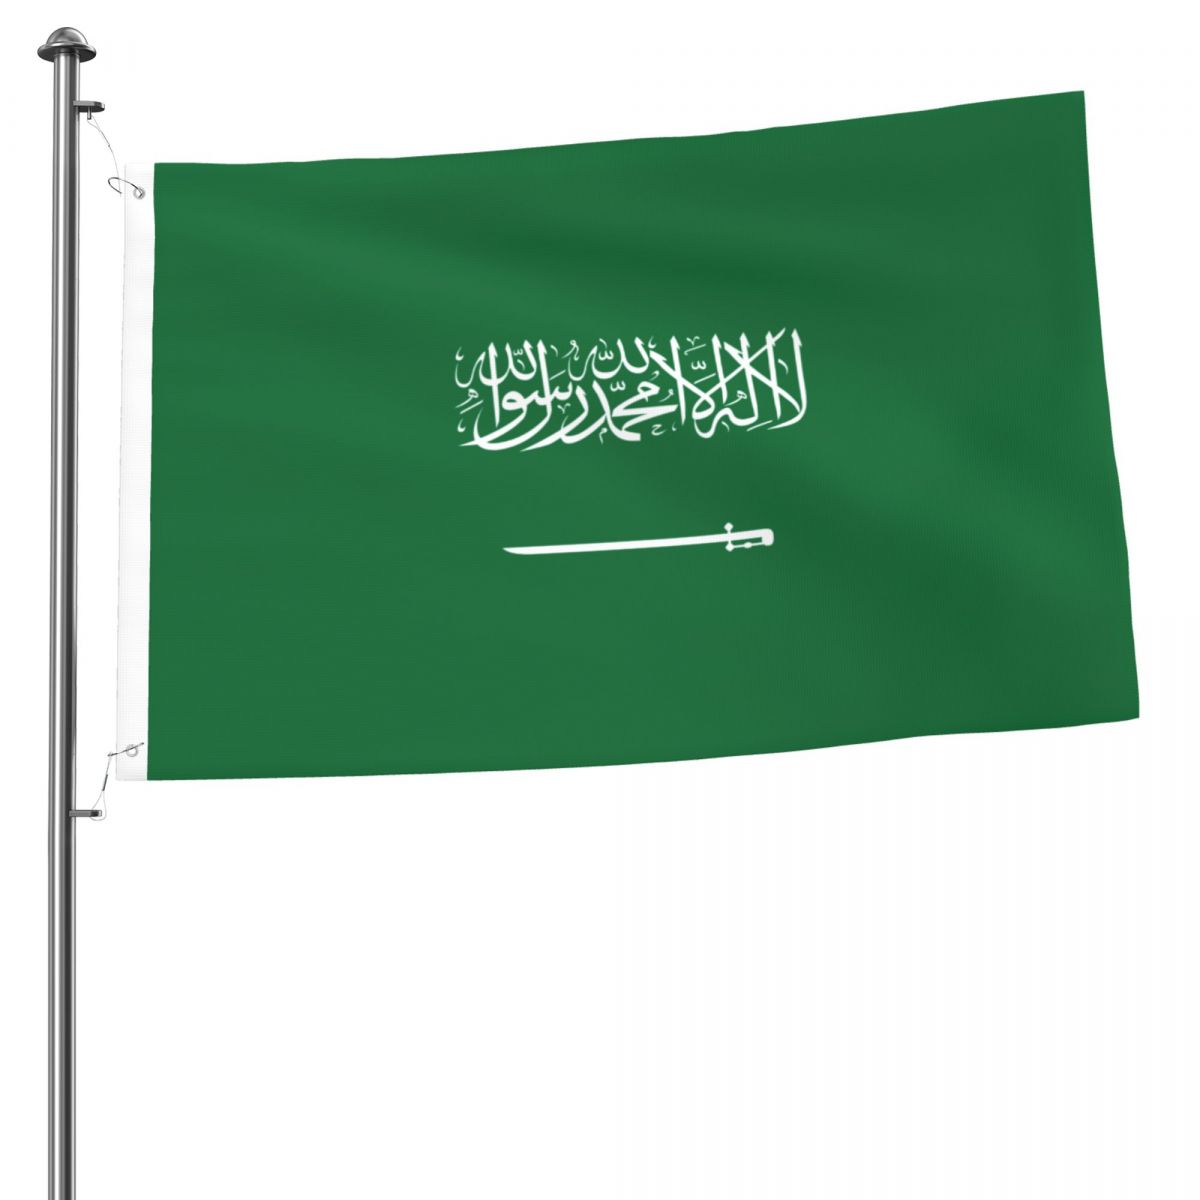 Saudi Arabia Flag 2x3 FT UV Resistant Flag